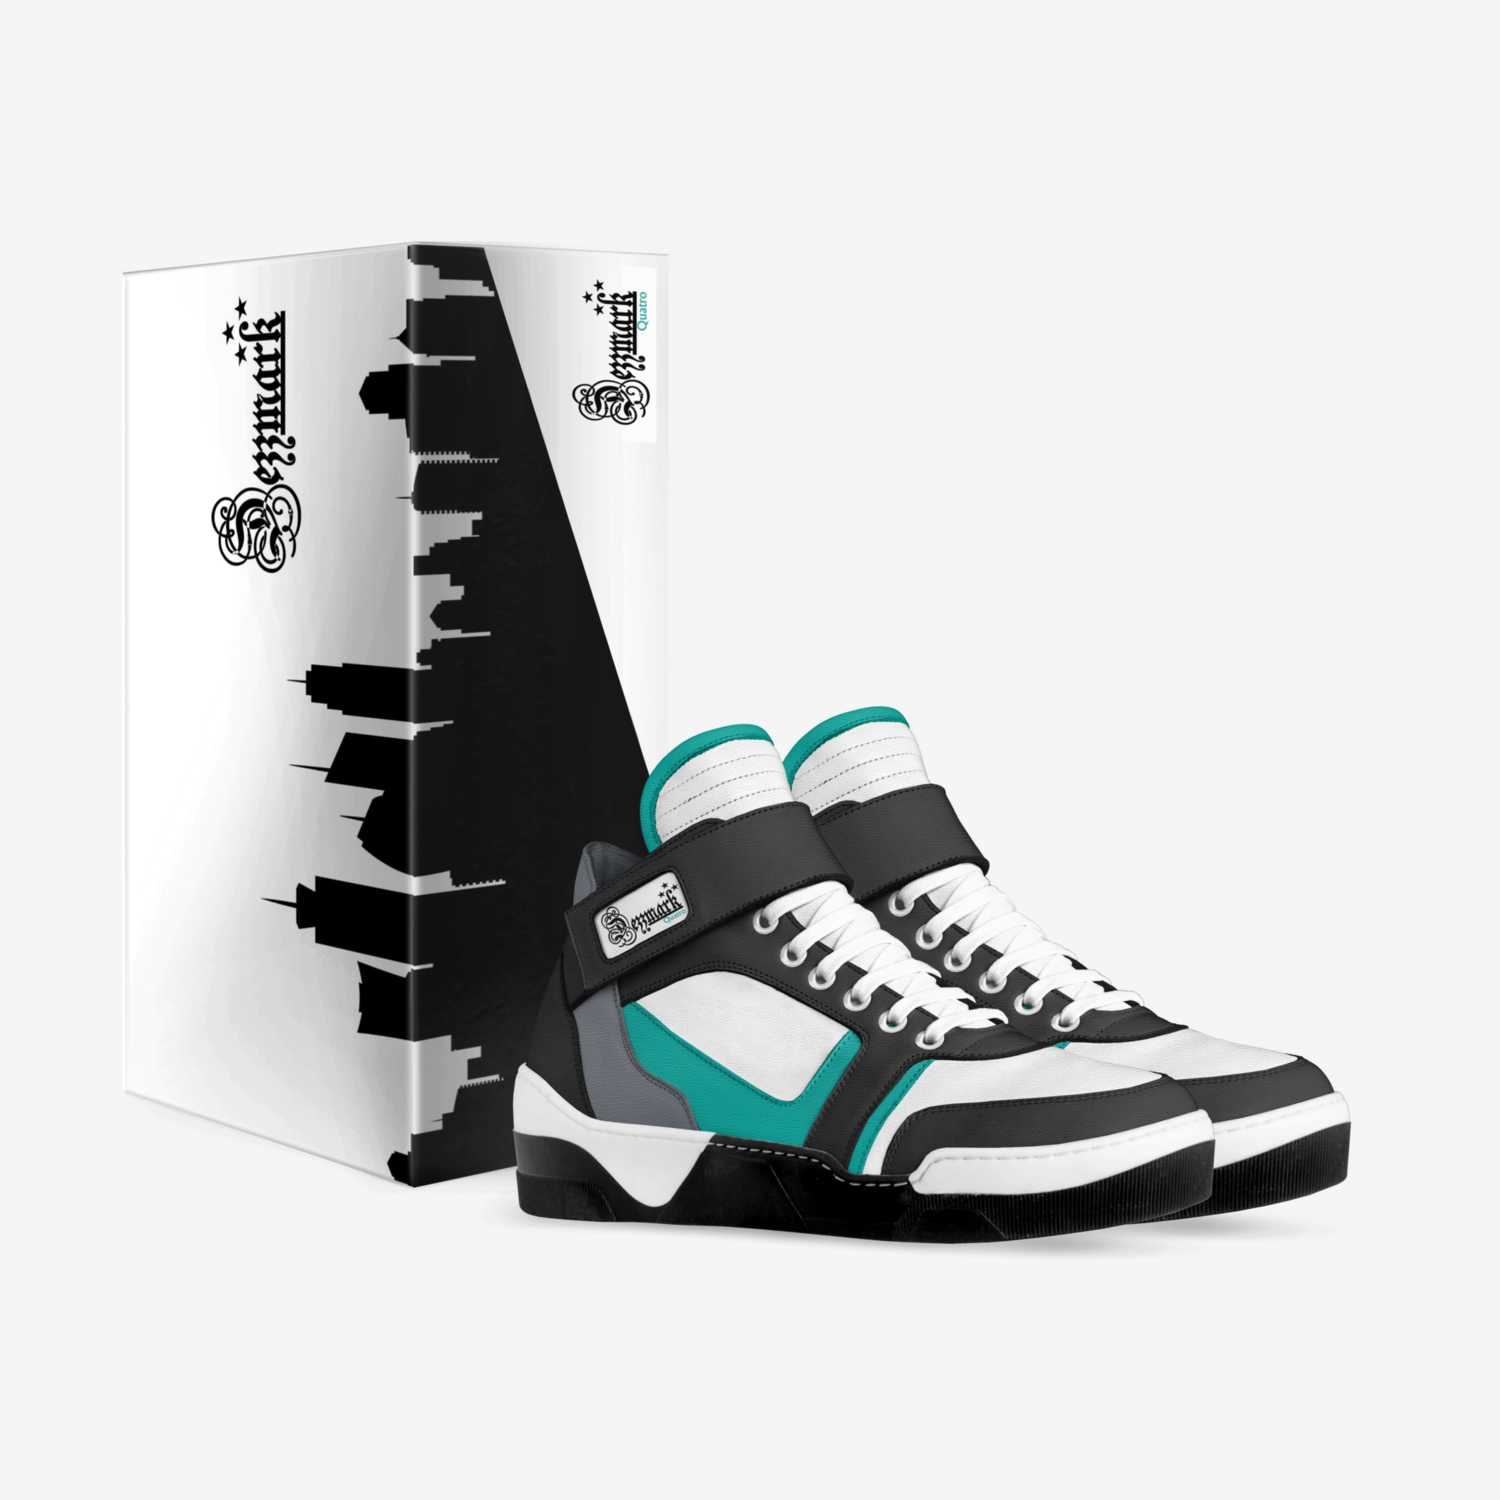 Dezzmark - Quatro custom made in Italy shoes by Mark Darocha | Box view